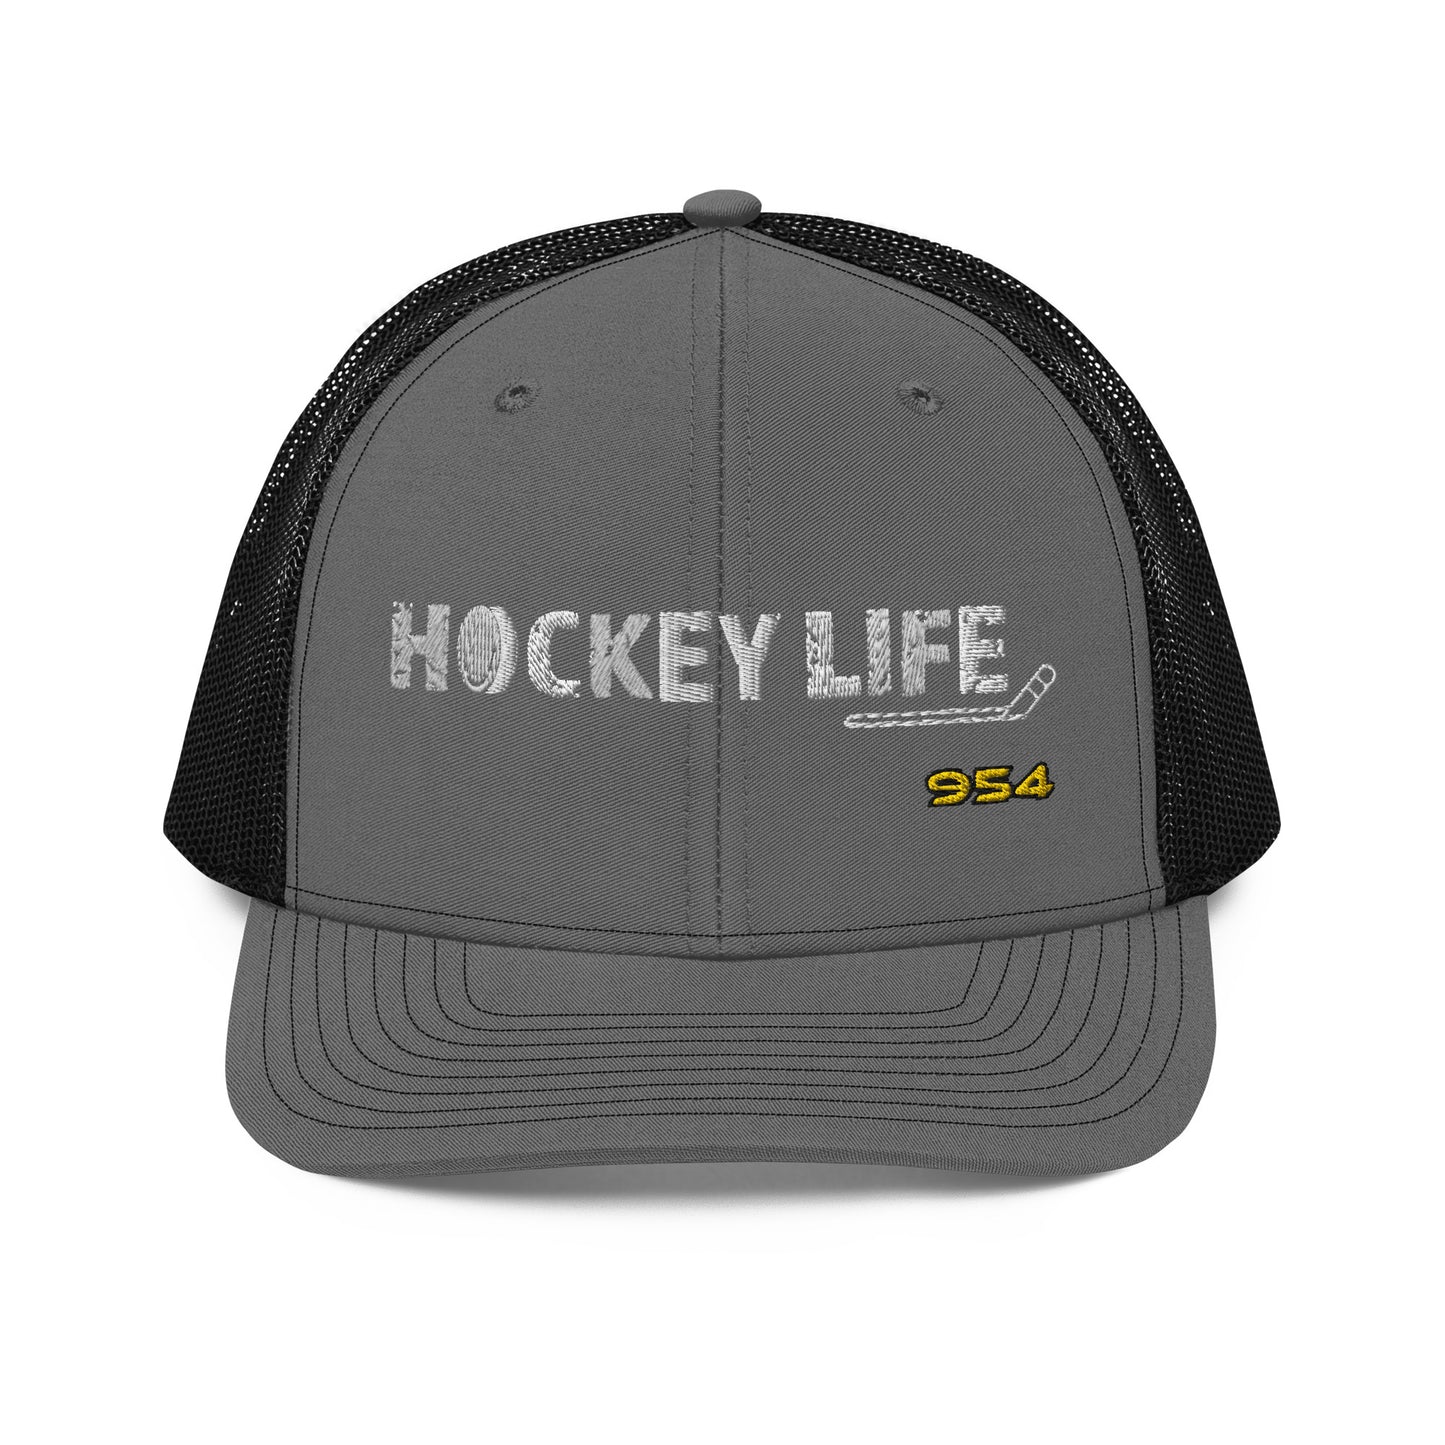 Hockey Life 954 Signature Cap